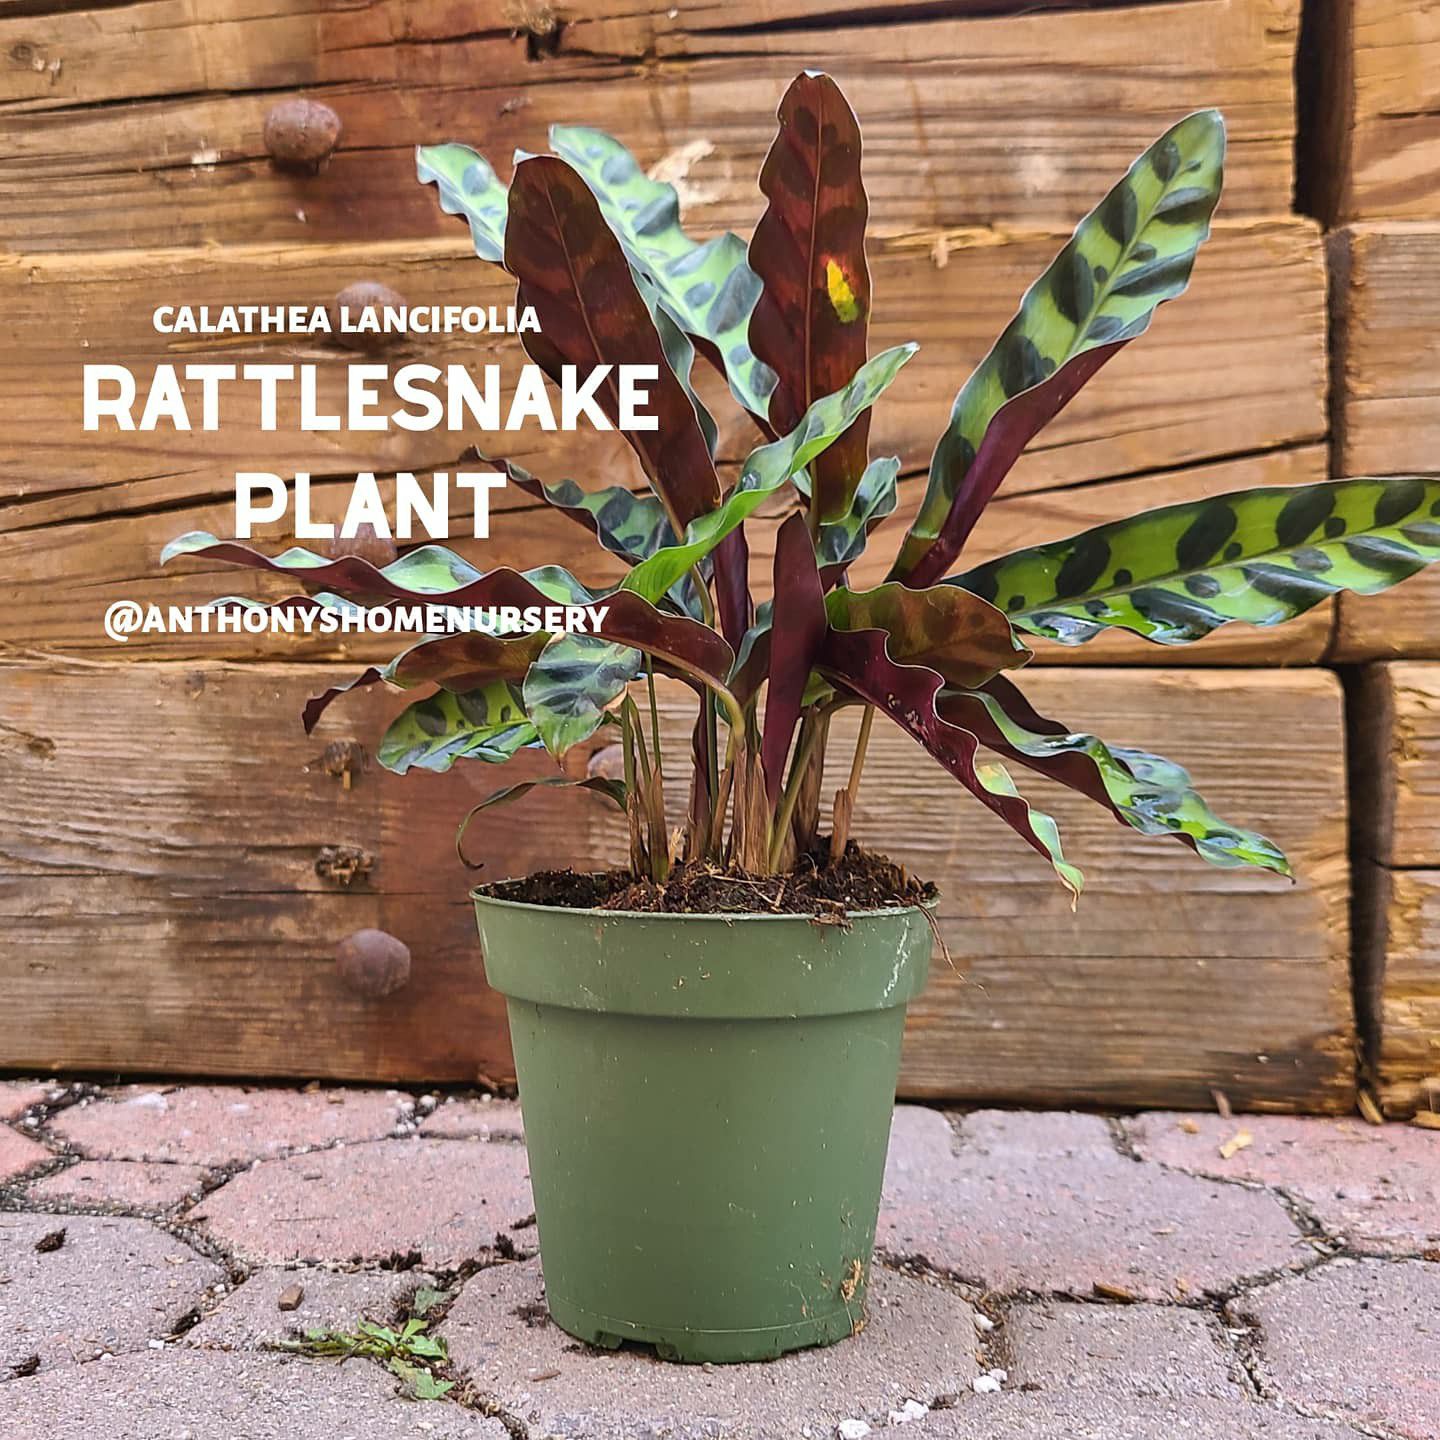 Rattlesnake Plant - Calathea lancifolia 4"